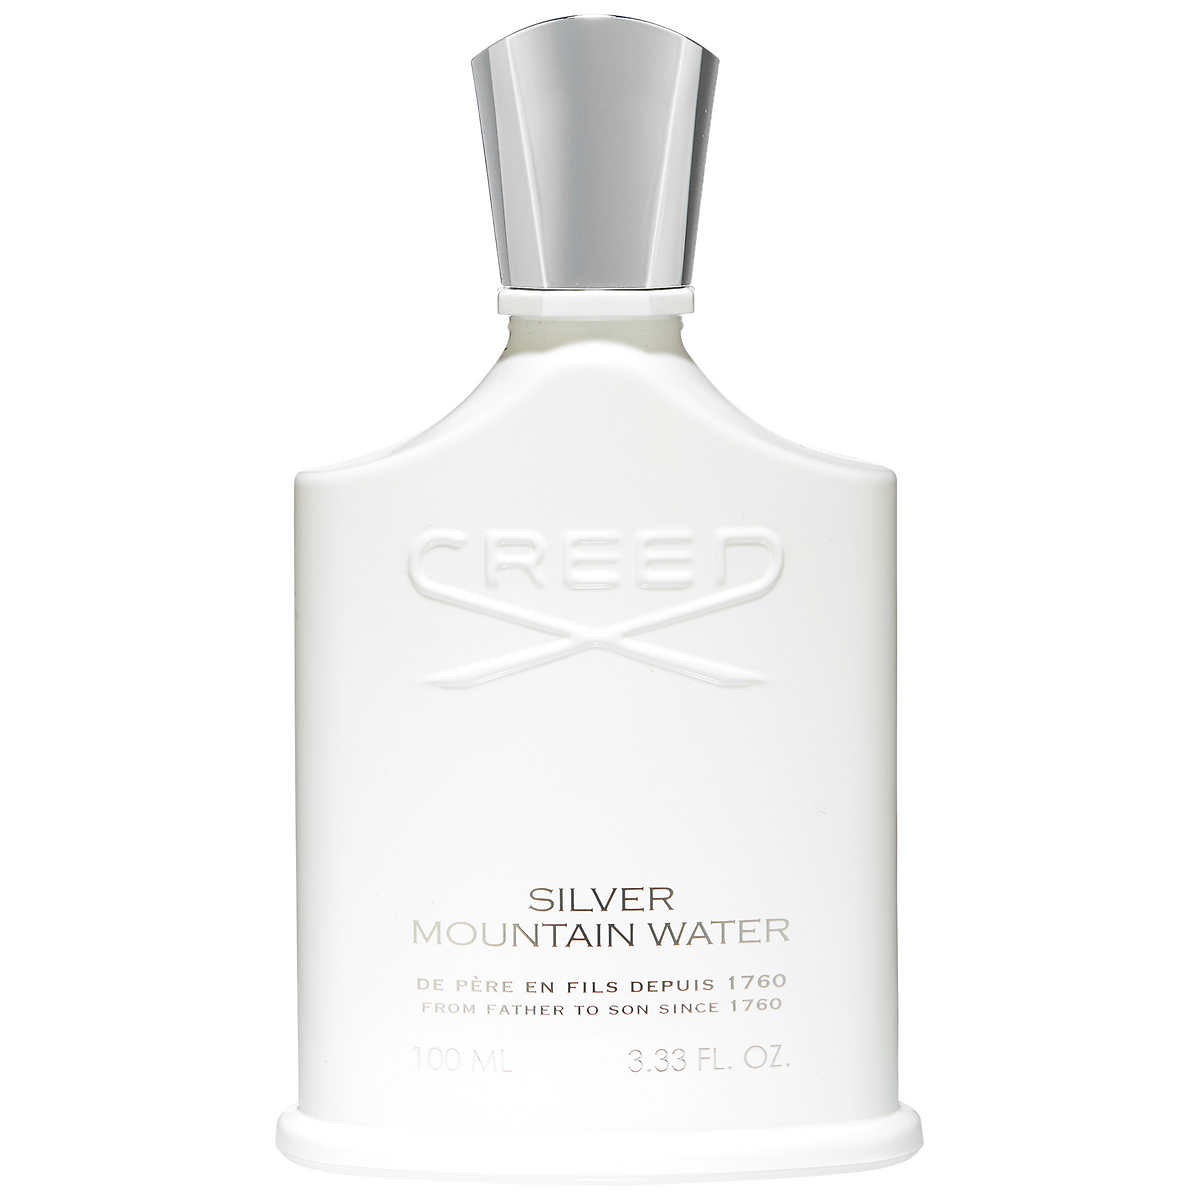 CREED Silver Mountain Water Eau de Parfum, 3.3 fl oz银色山泉